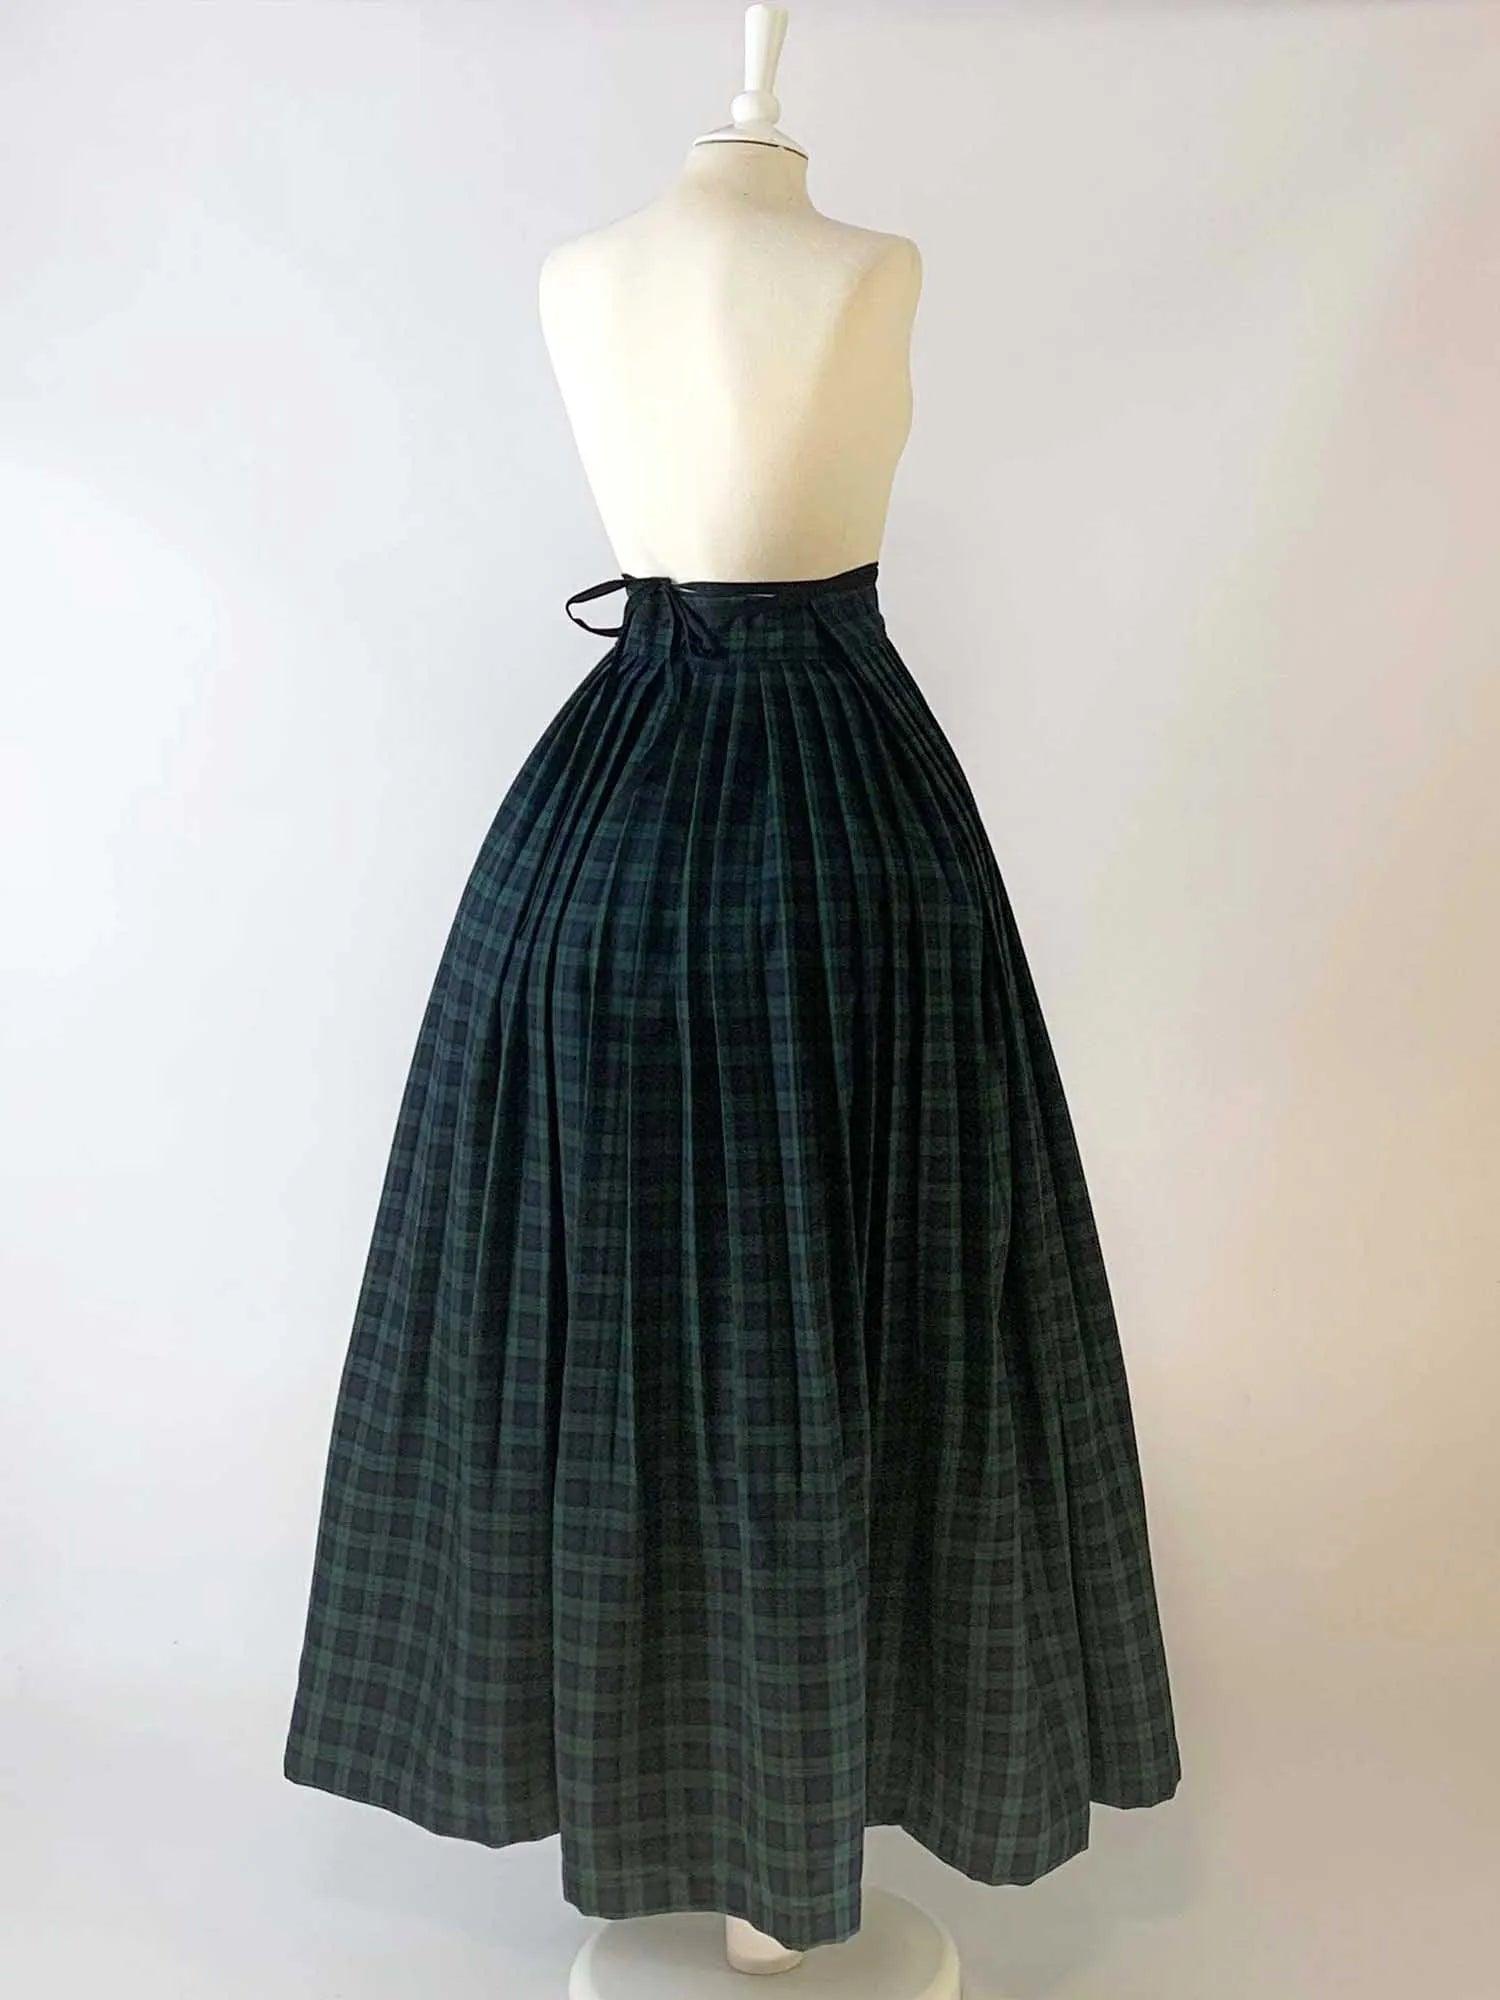 Plaid Skirt in Blackwatch Tartan (small pattern) - Atelier Serraspina